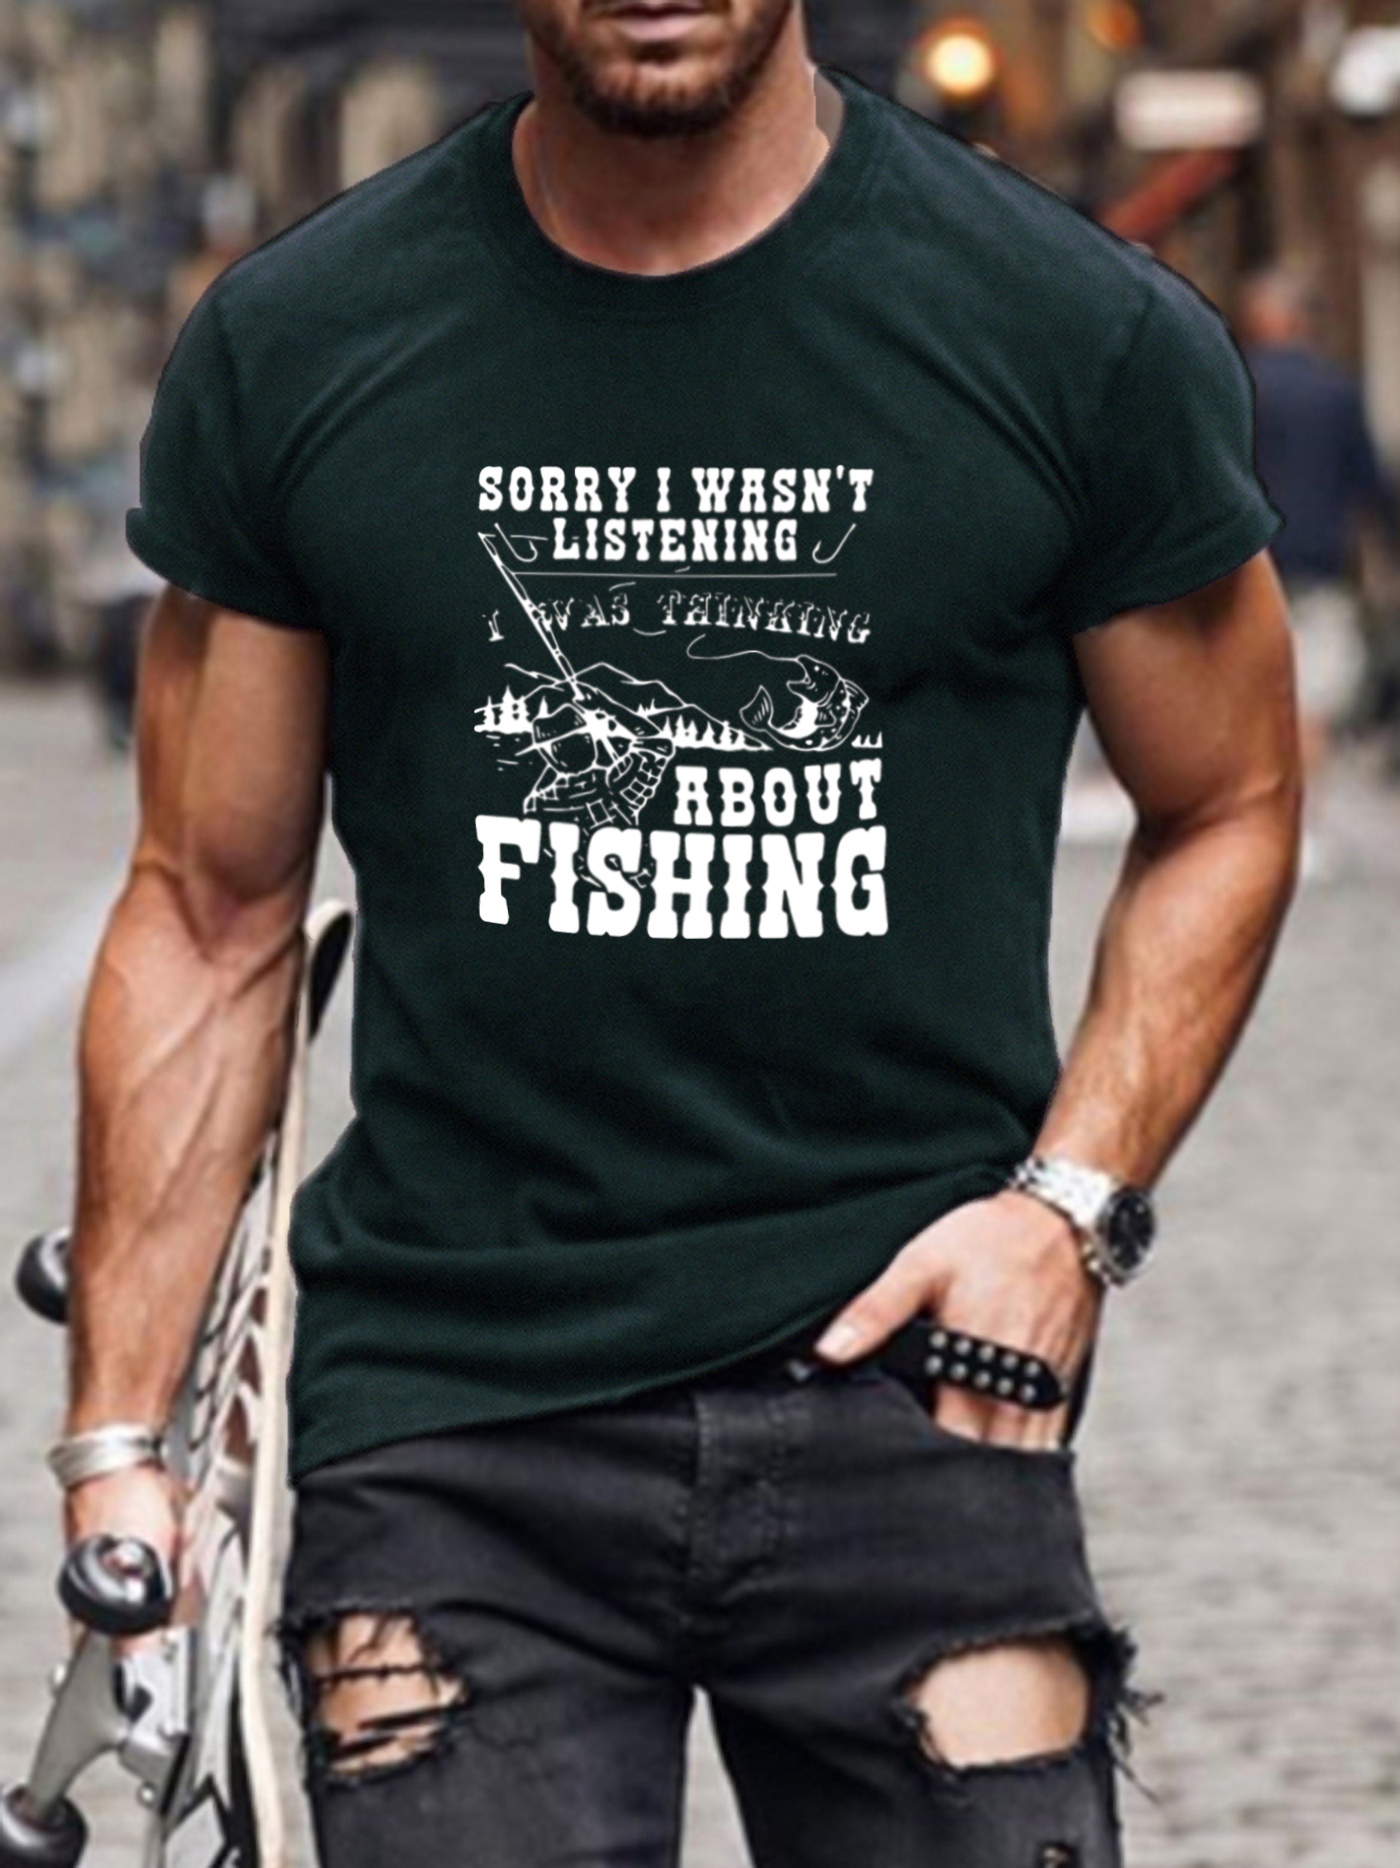 Men's Pullover Short Sleeves, Fishing Clothing T-shirts